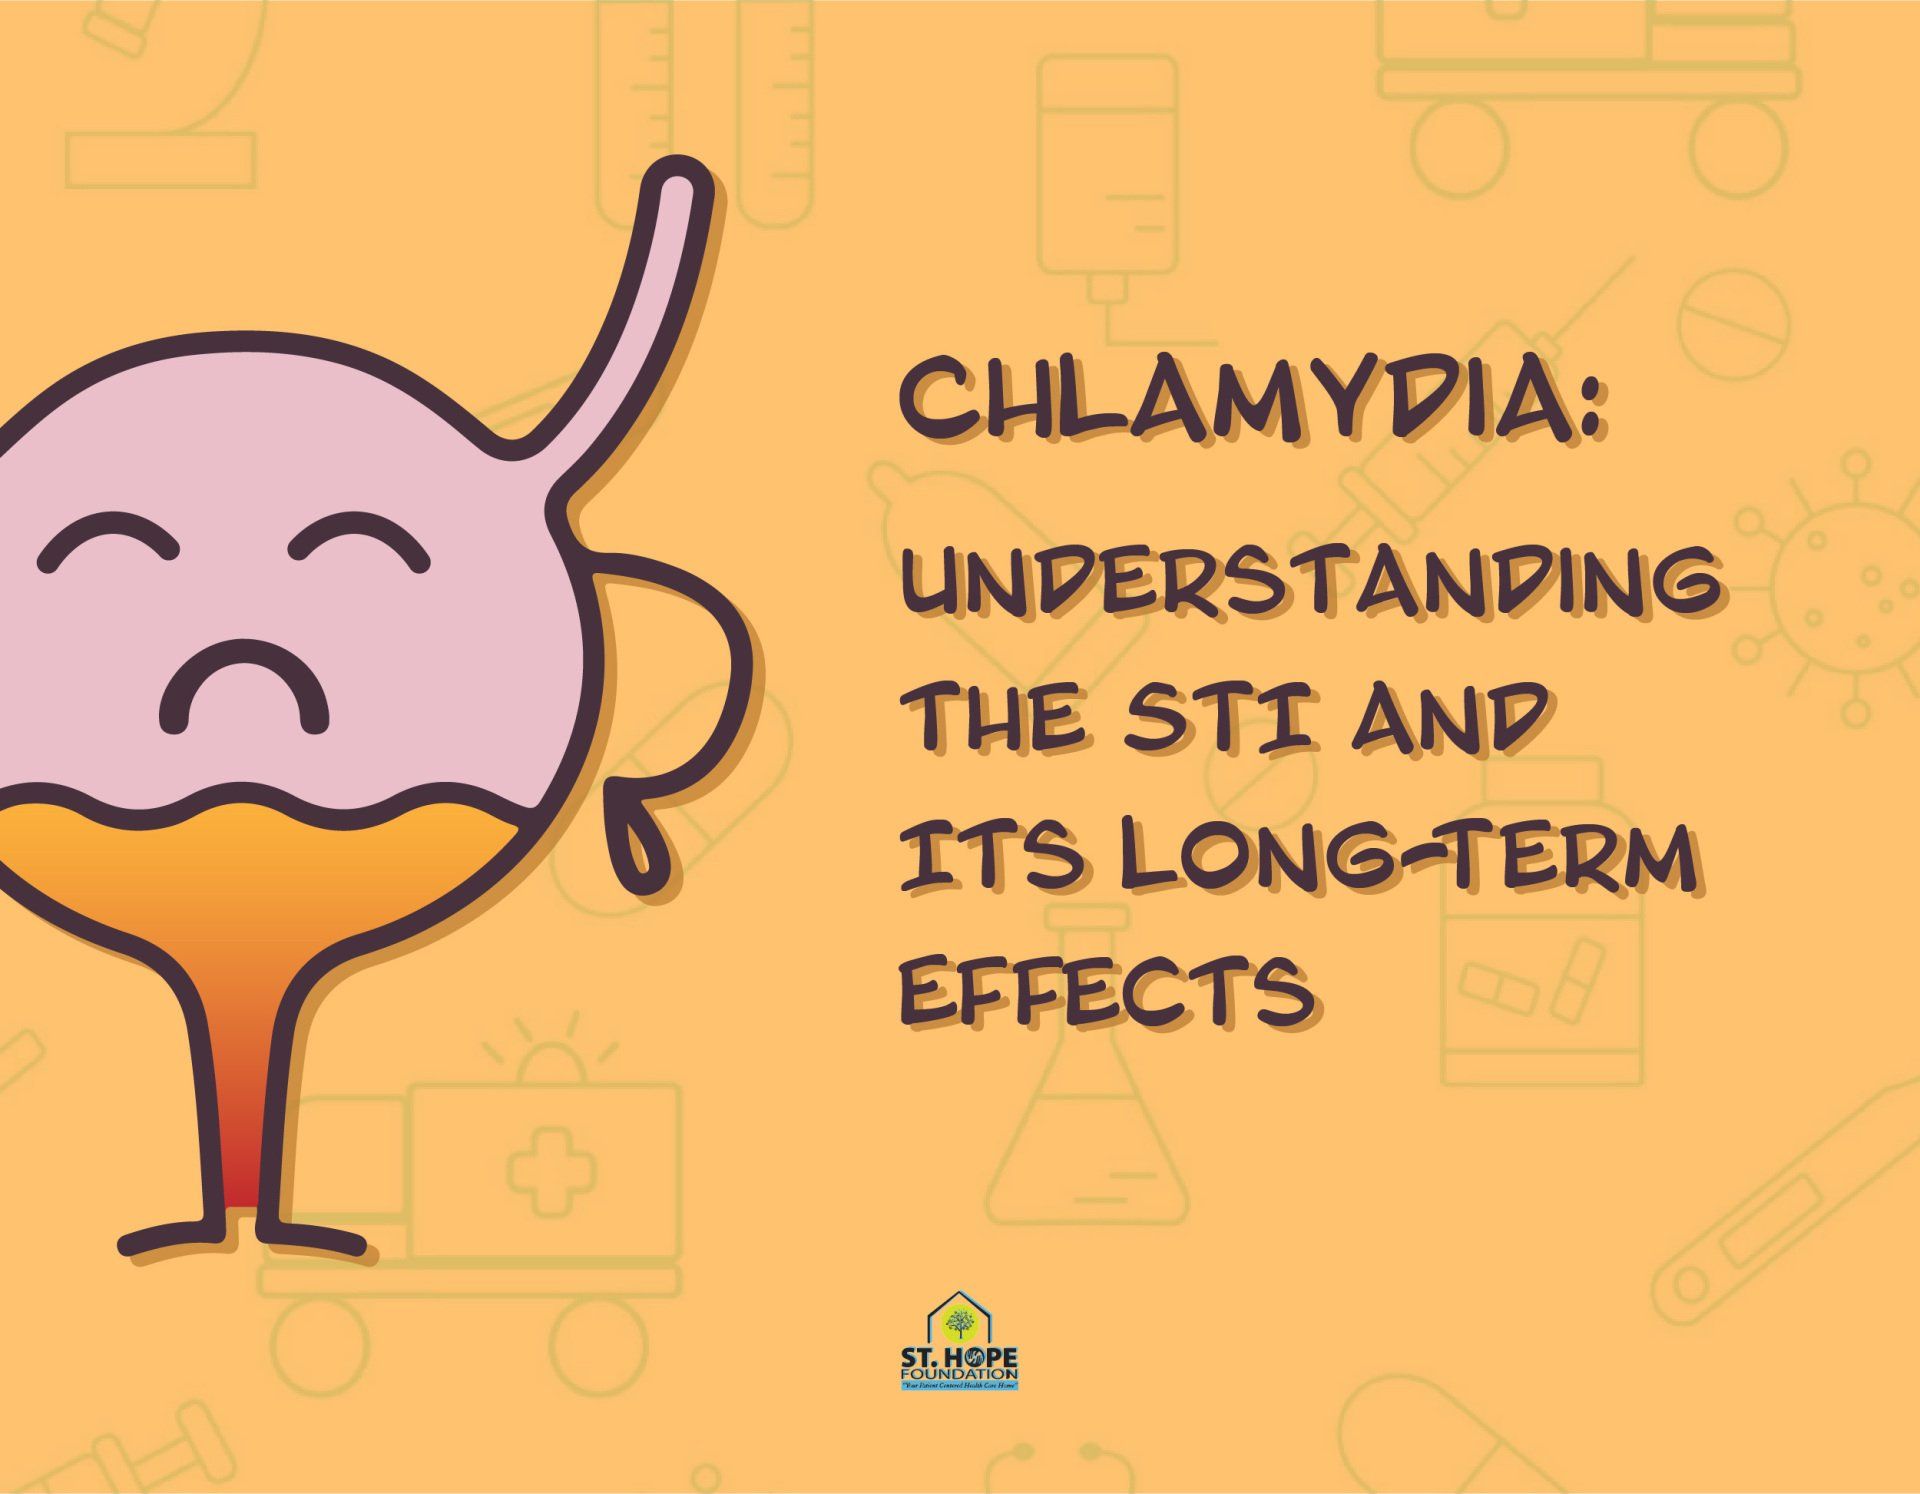 chlamydia: STI and effects